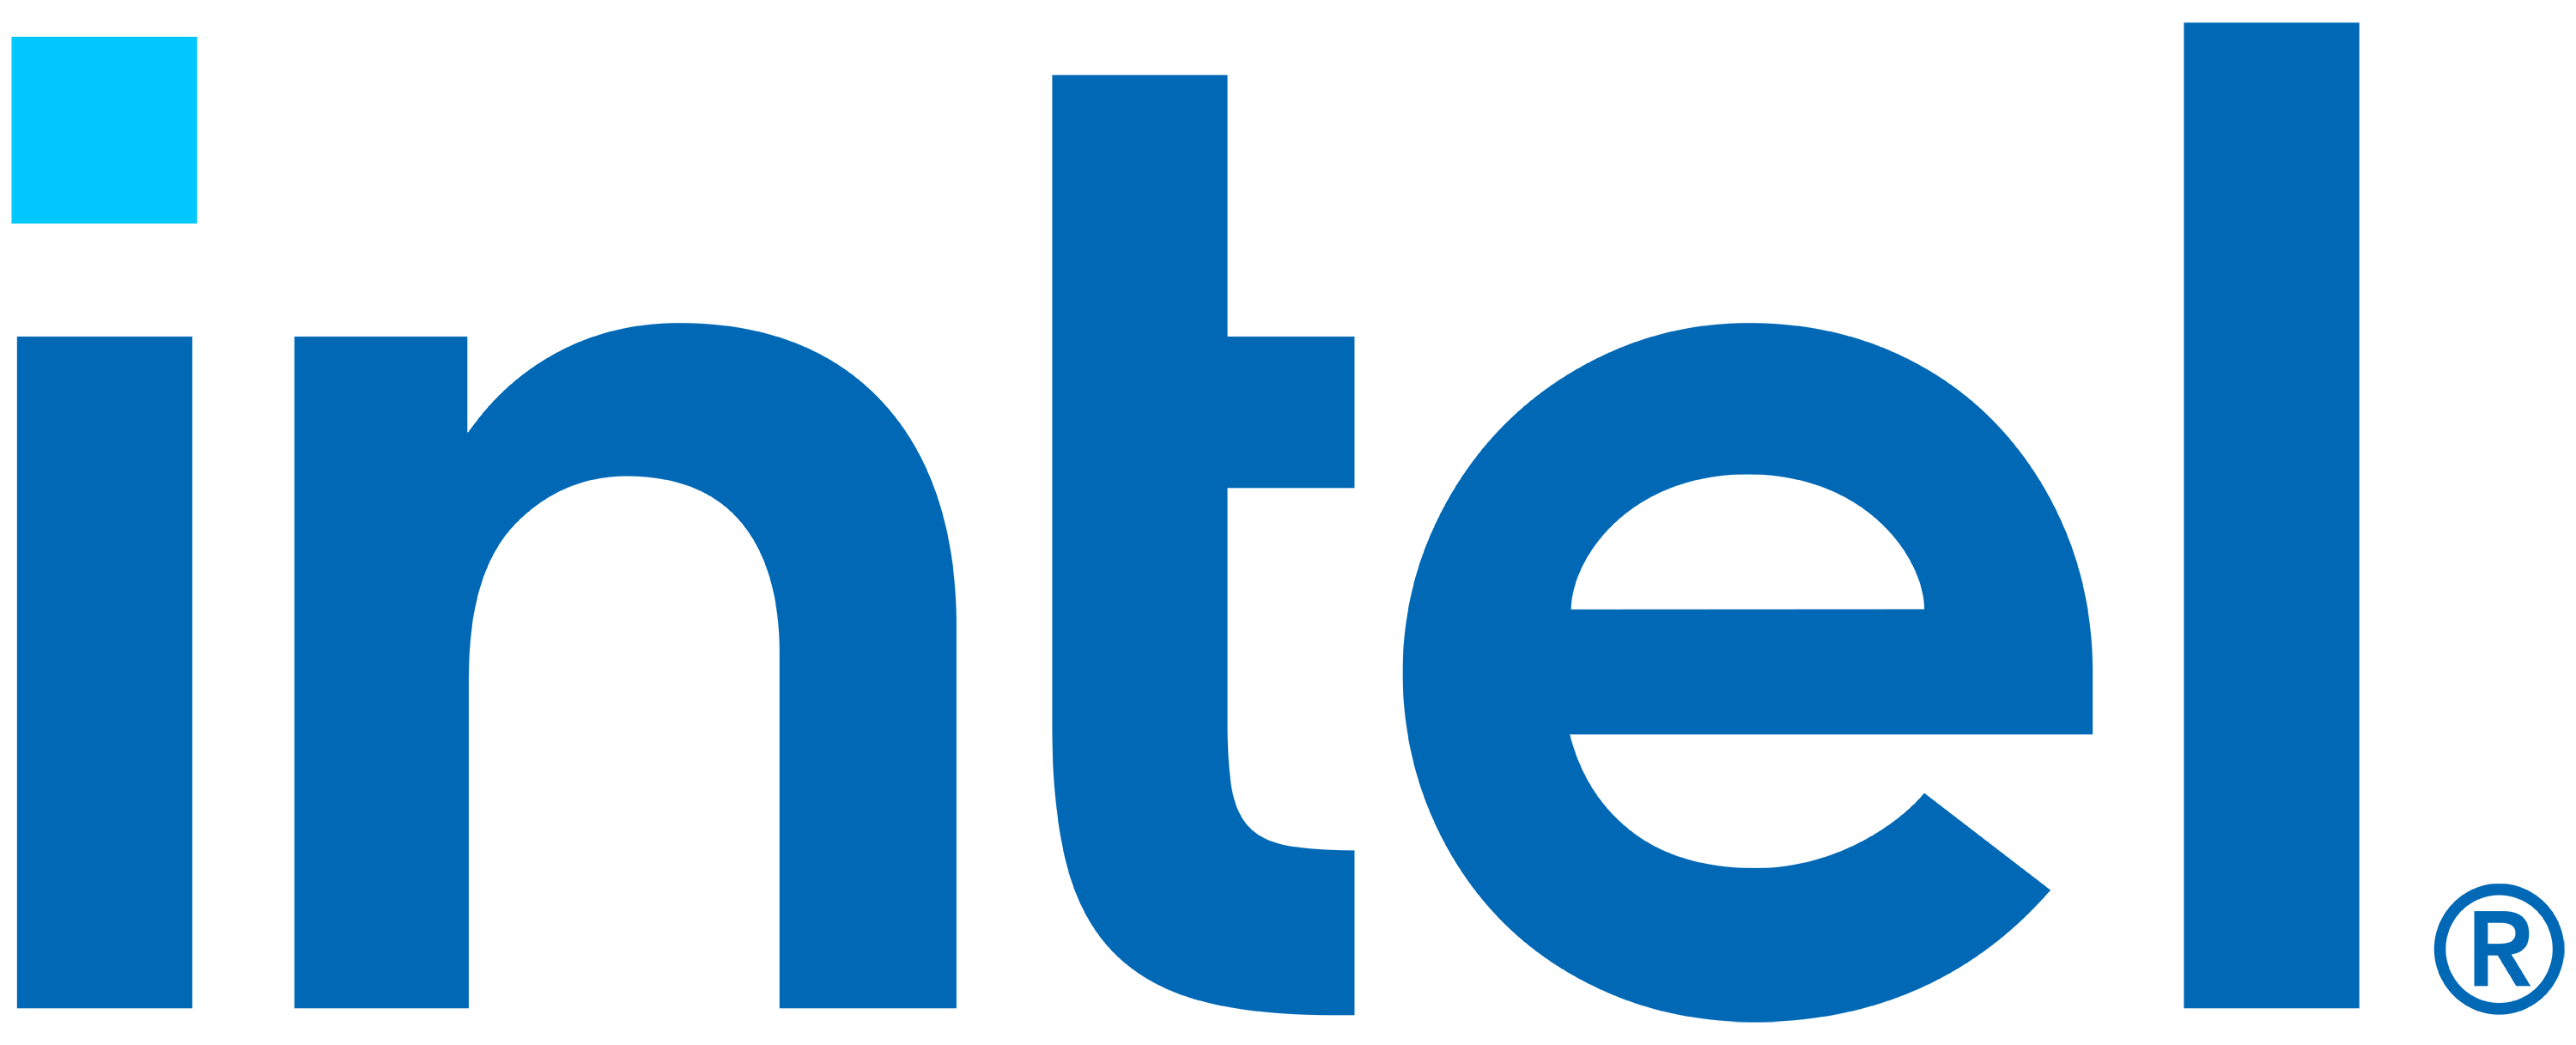 Intel.png